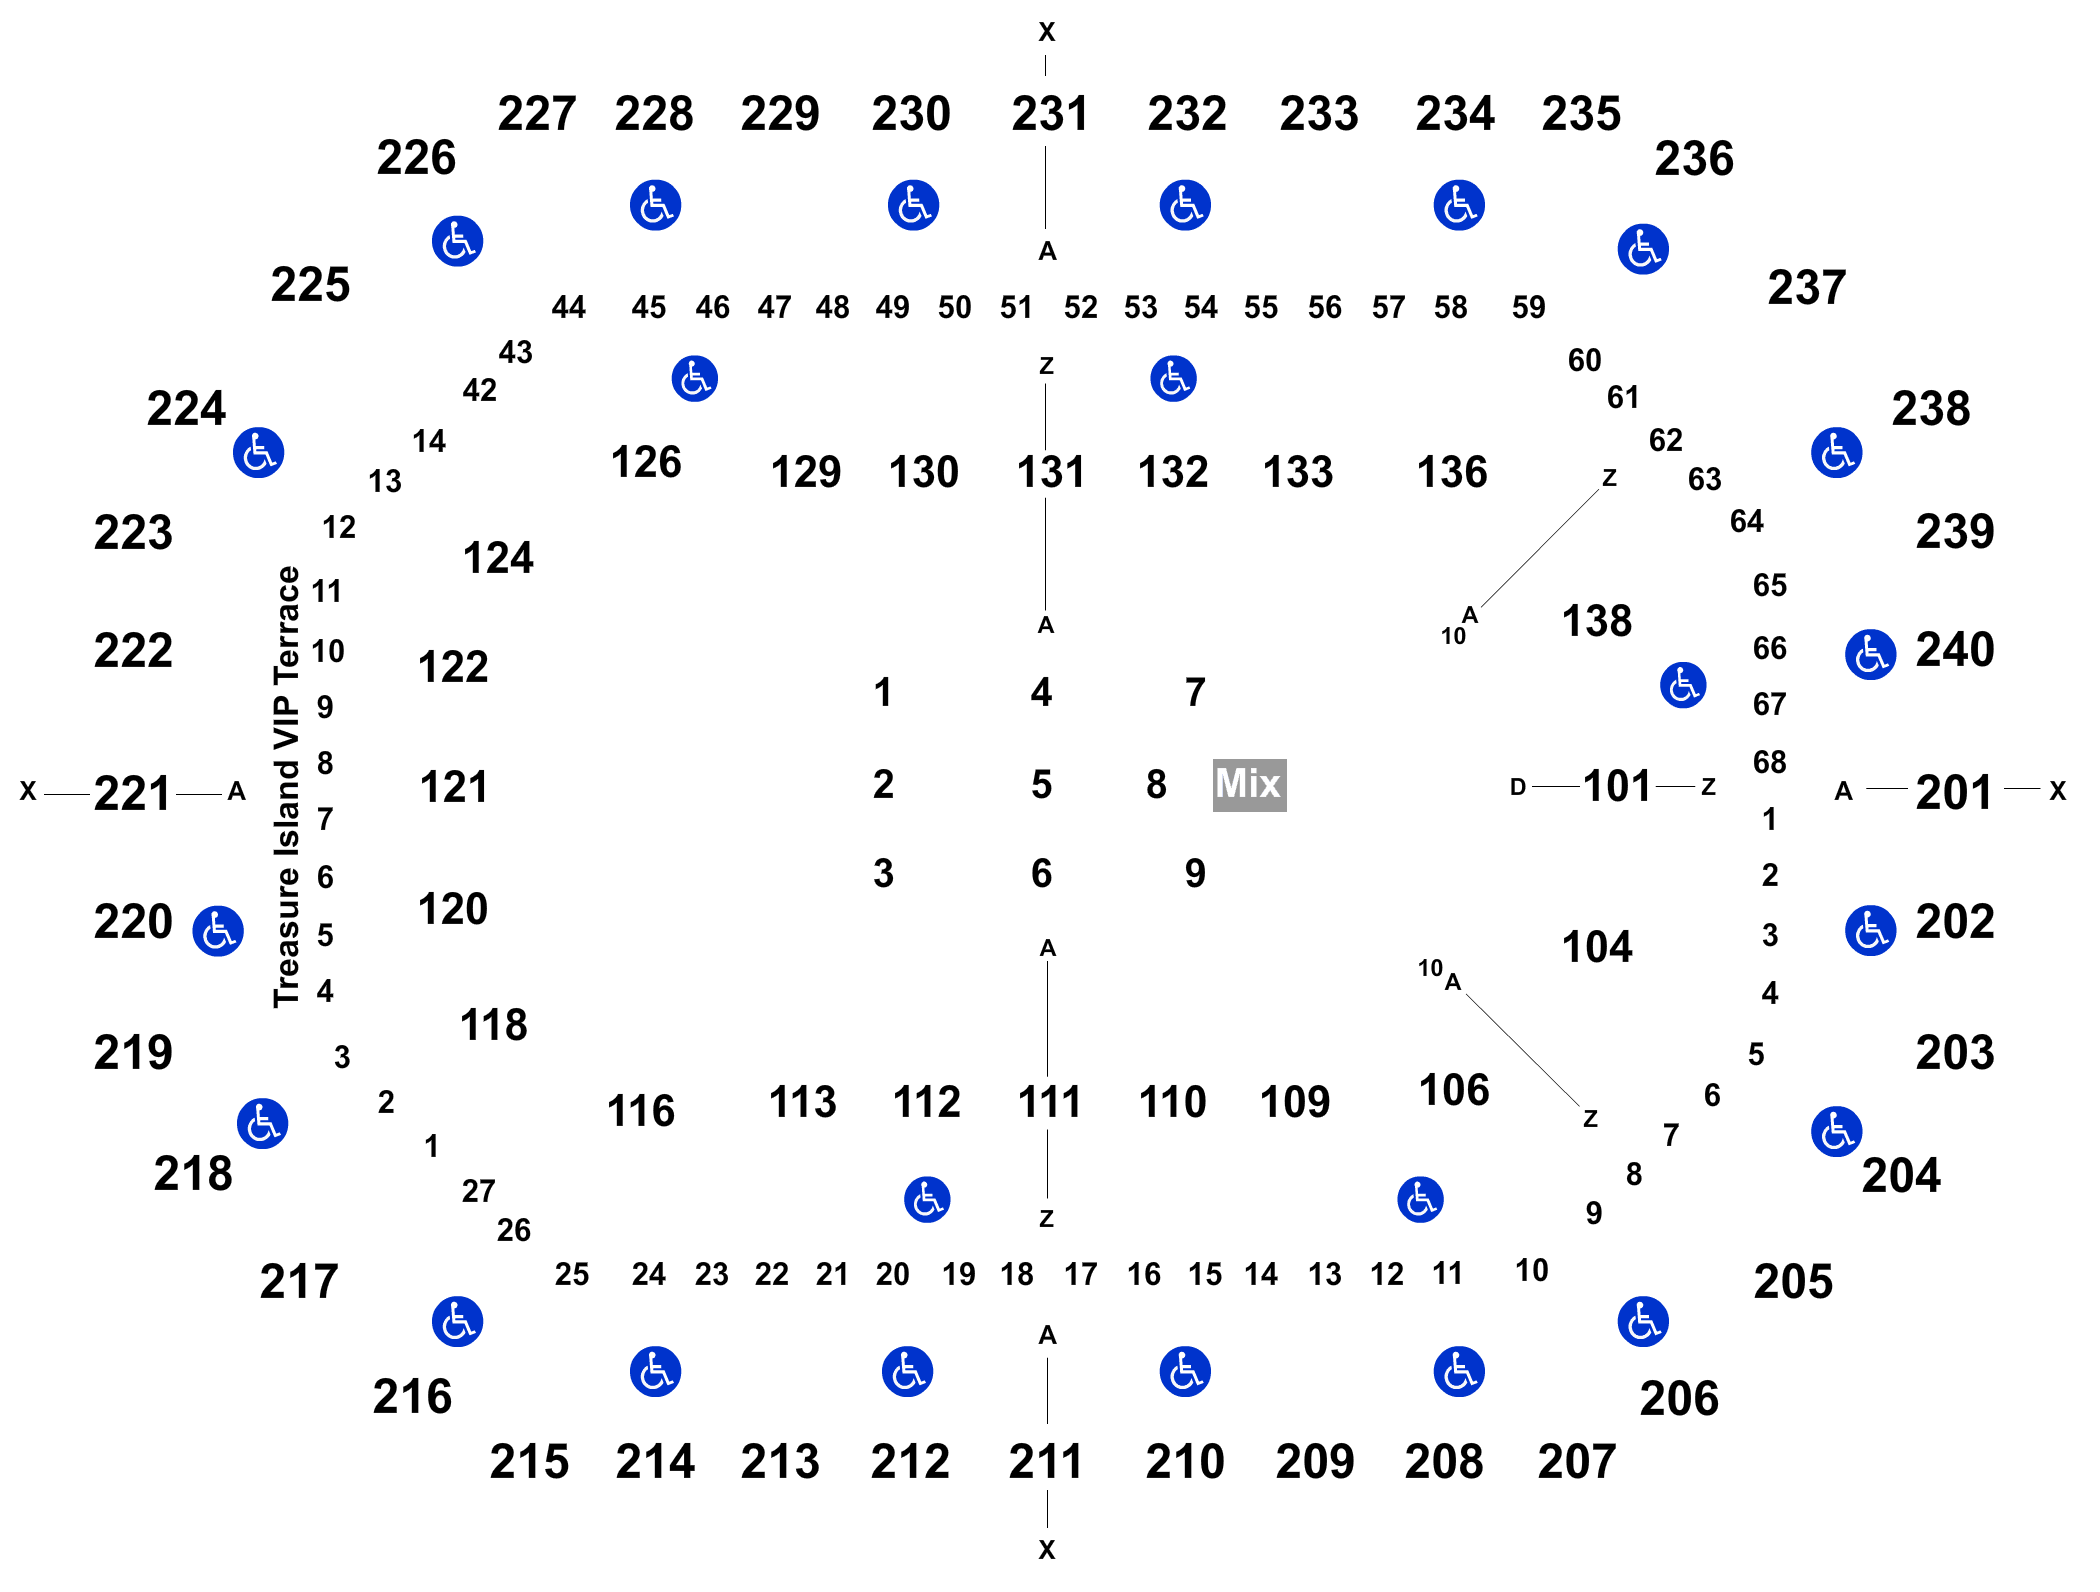 Target Center, Minneapolis MN - Seating Chart View